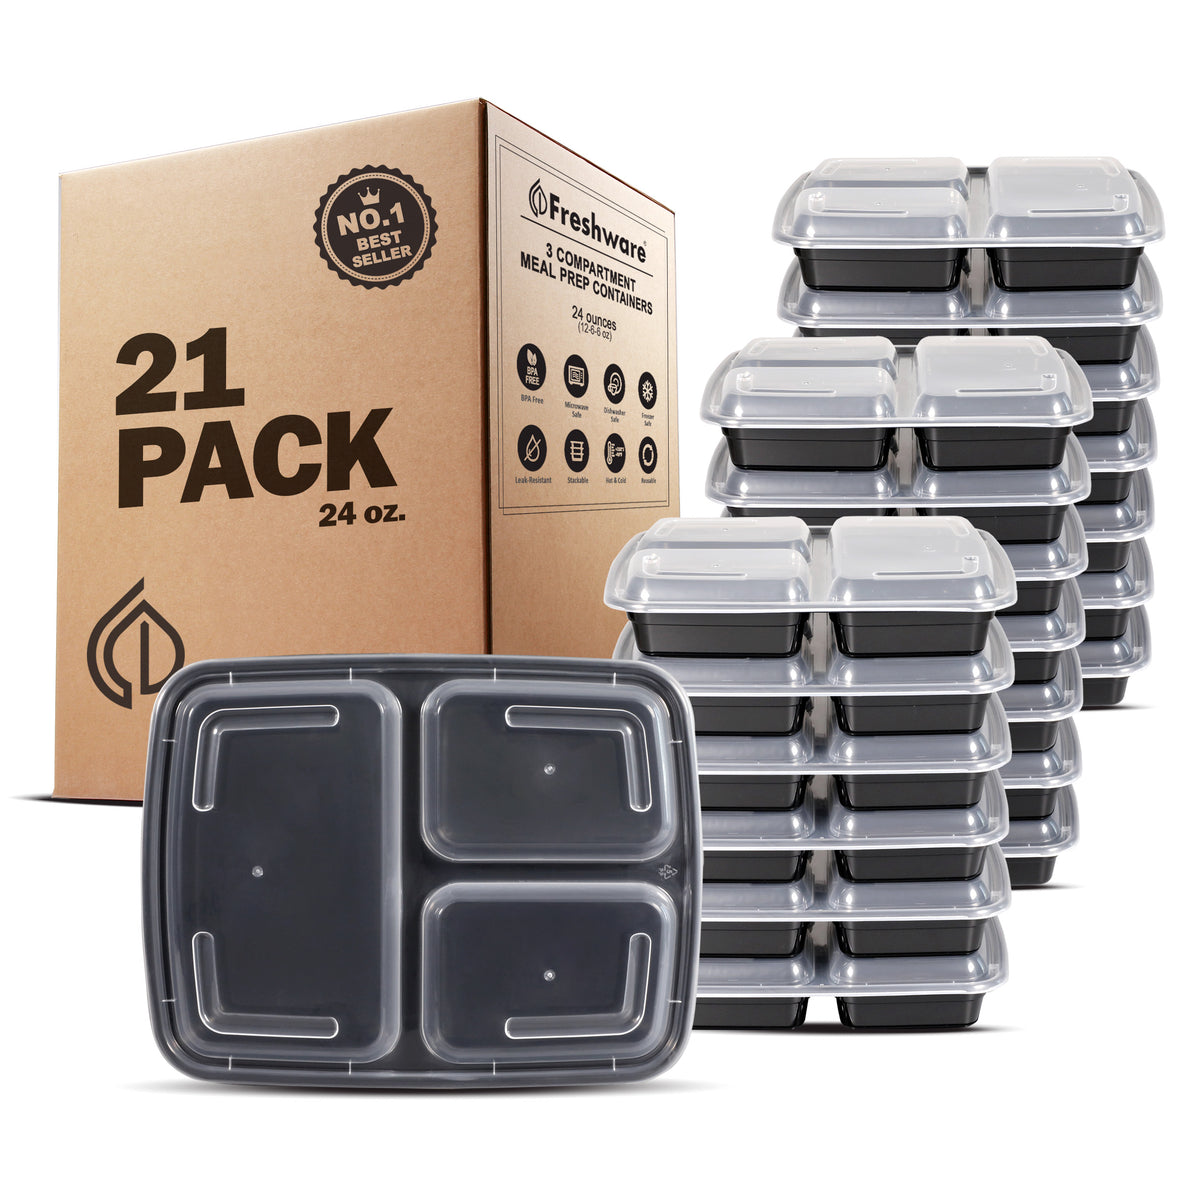 Meal Prep Plastic Containers 3 Compartment - [15-Pack] – PrepNaturals